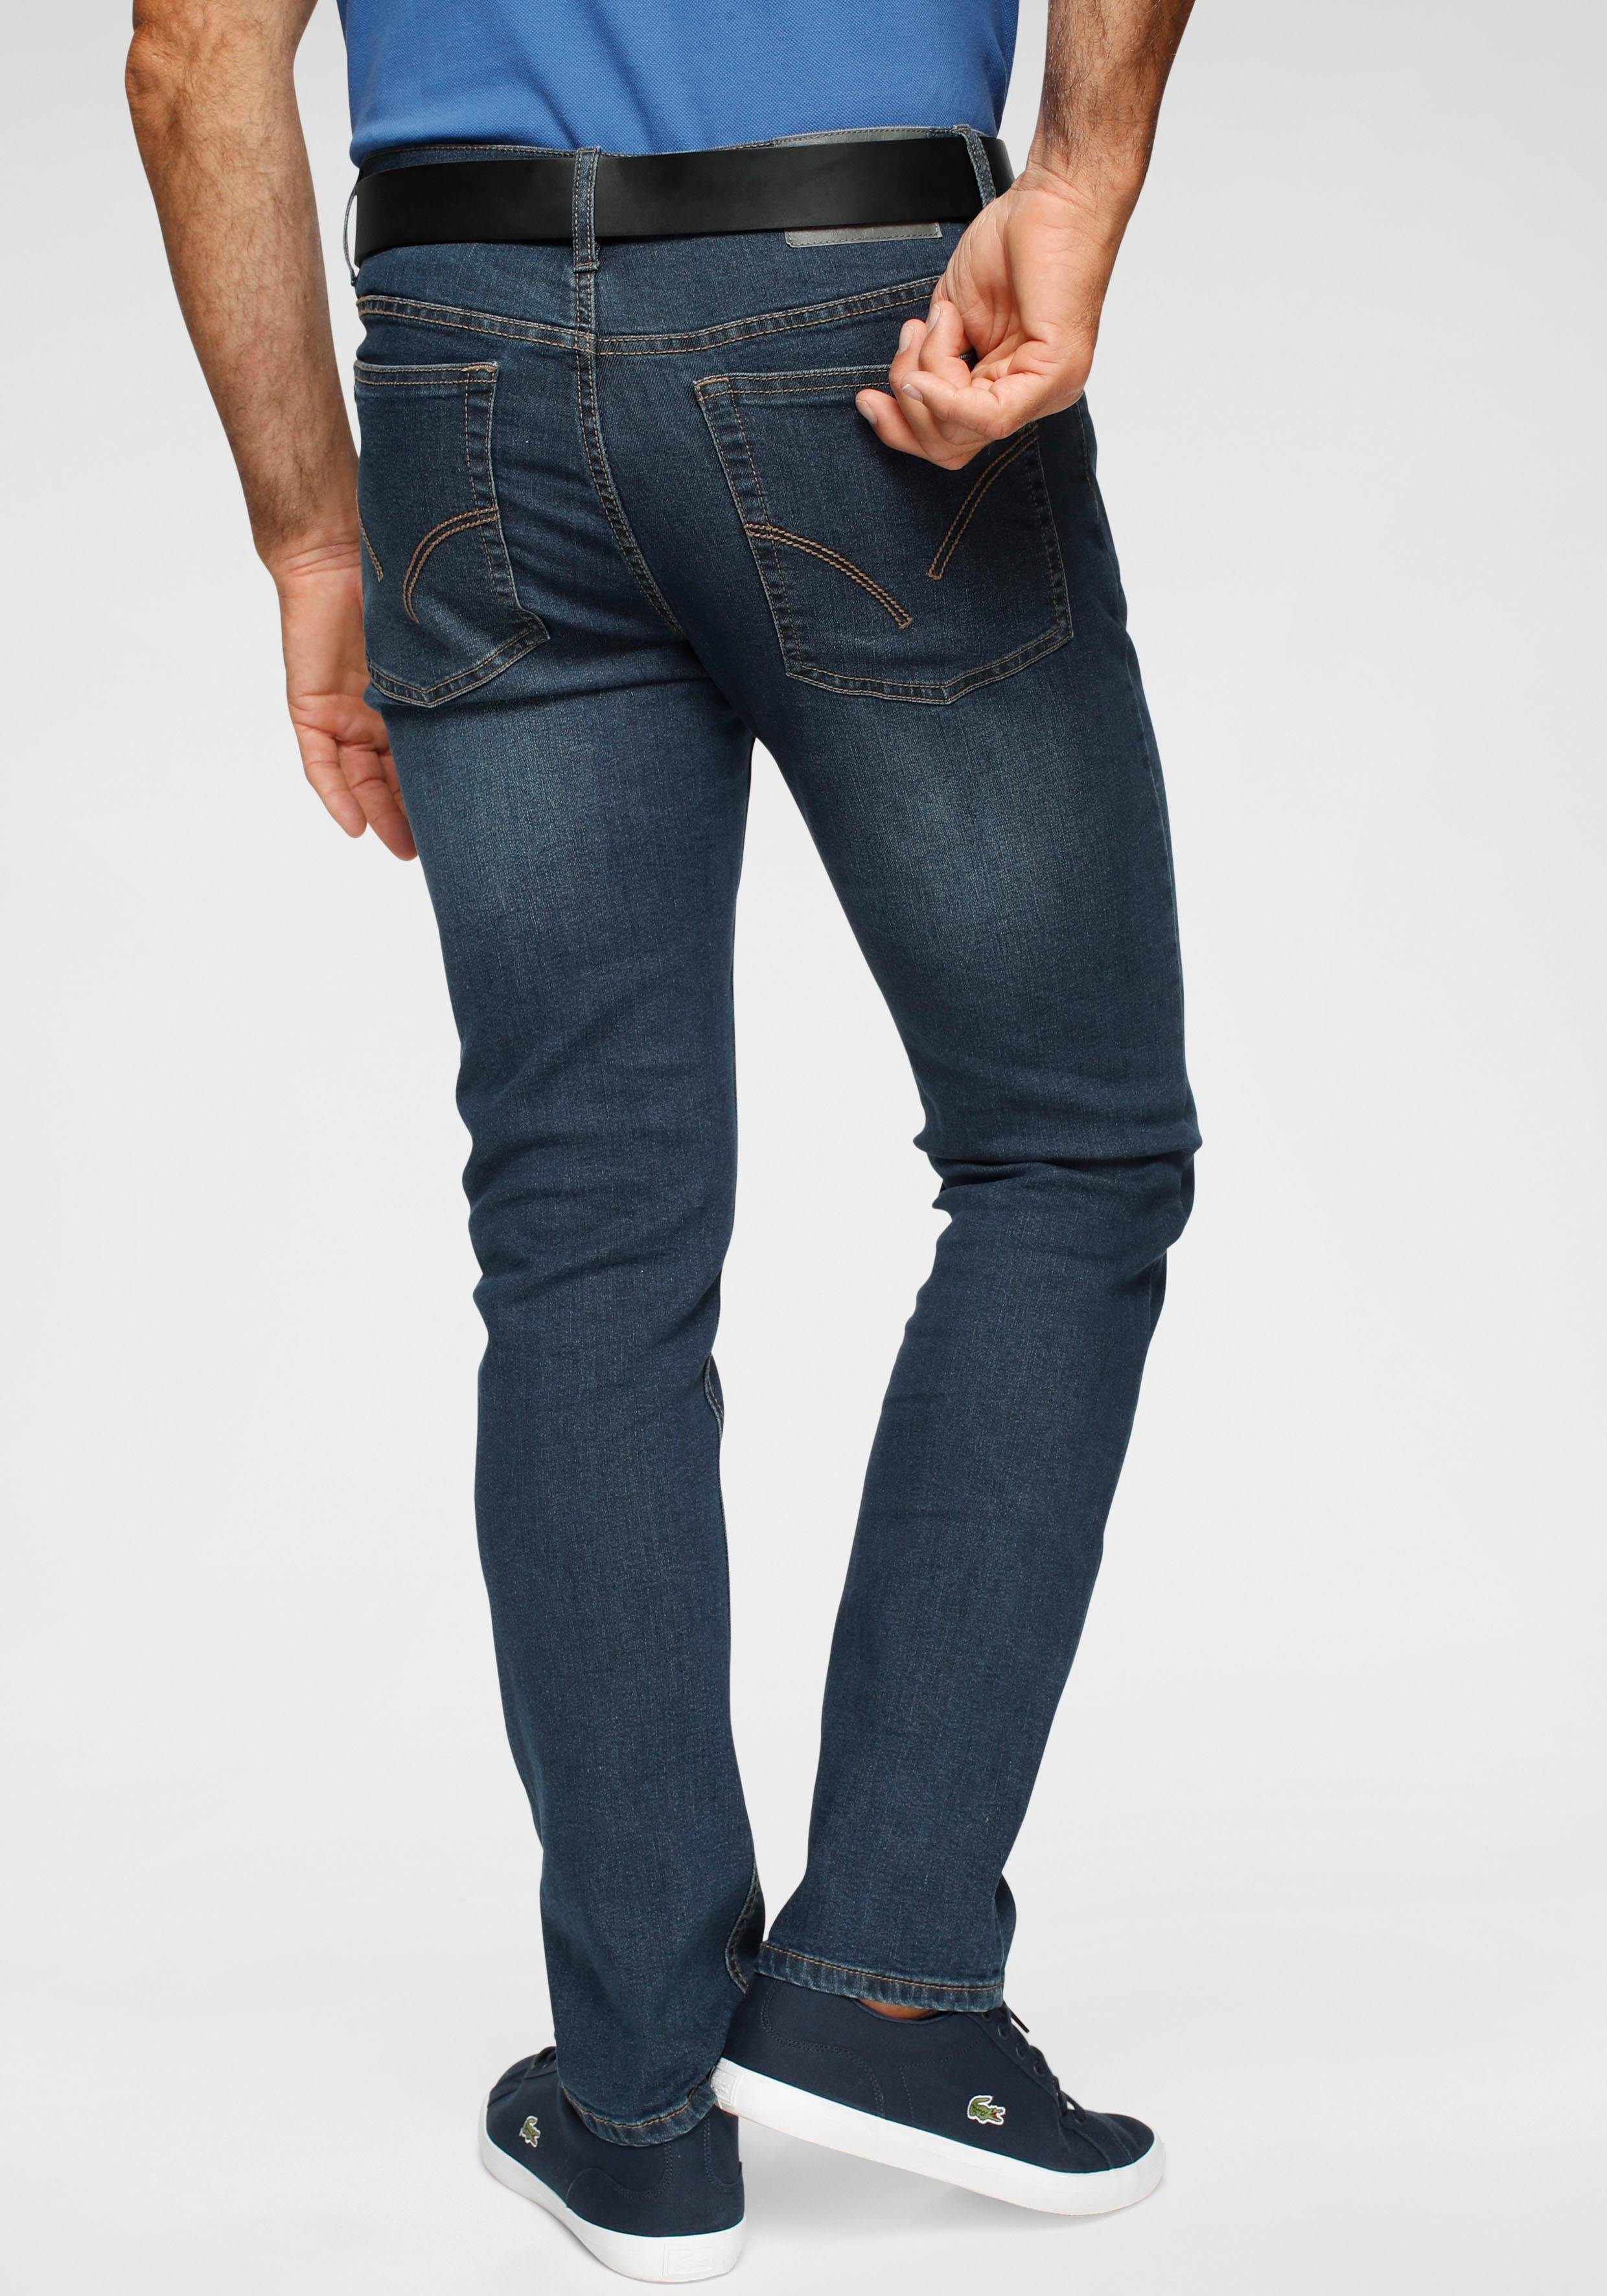 Emporio Armani Denim Slim-fit Jeans in het Blauw voor heren Heren Kleding voor voor Jeans voor Slim jeans 